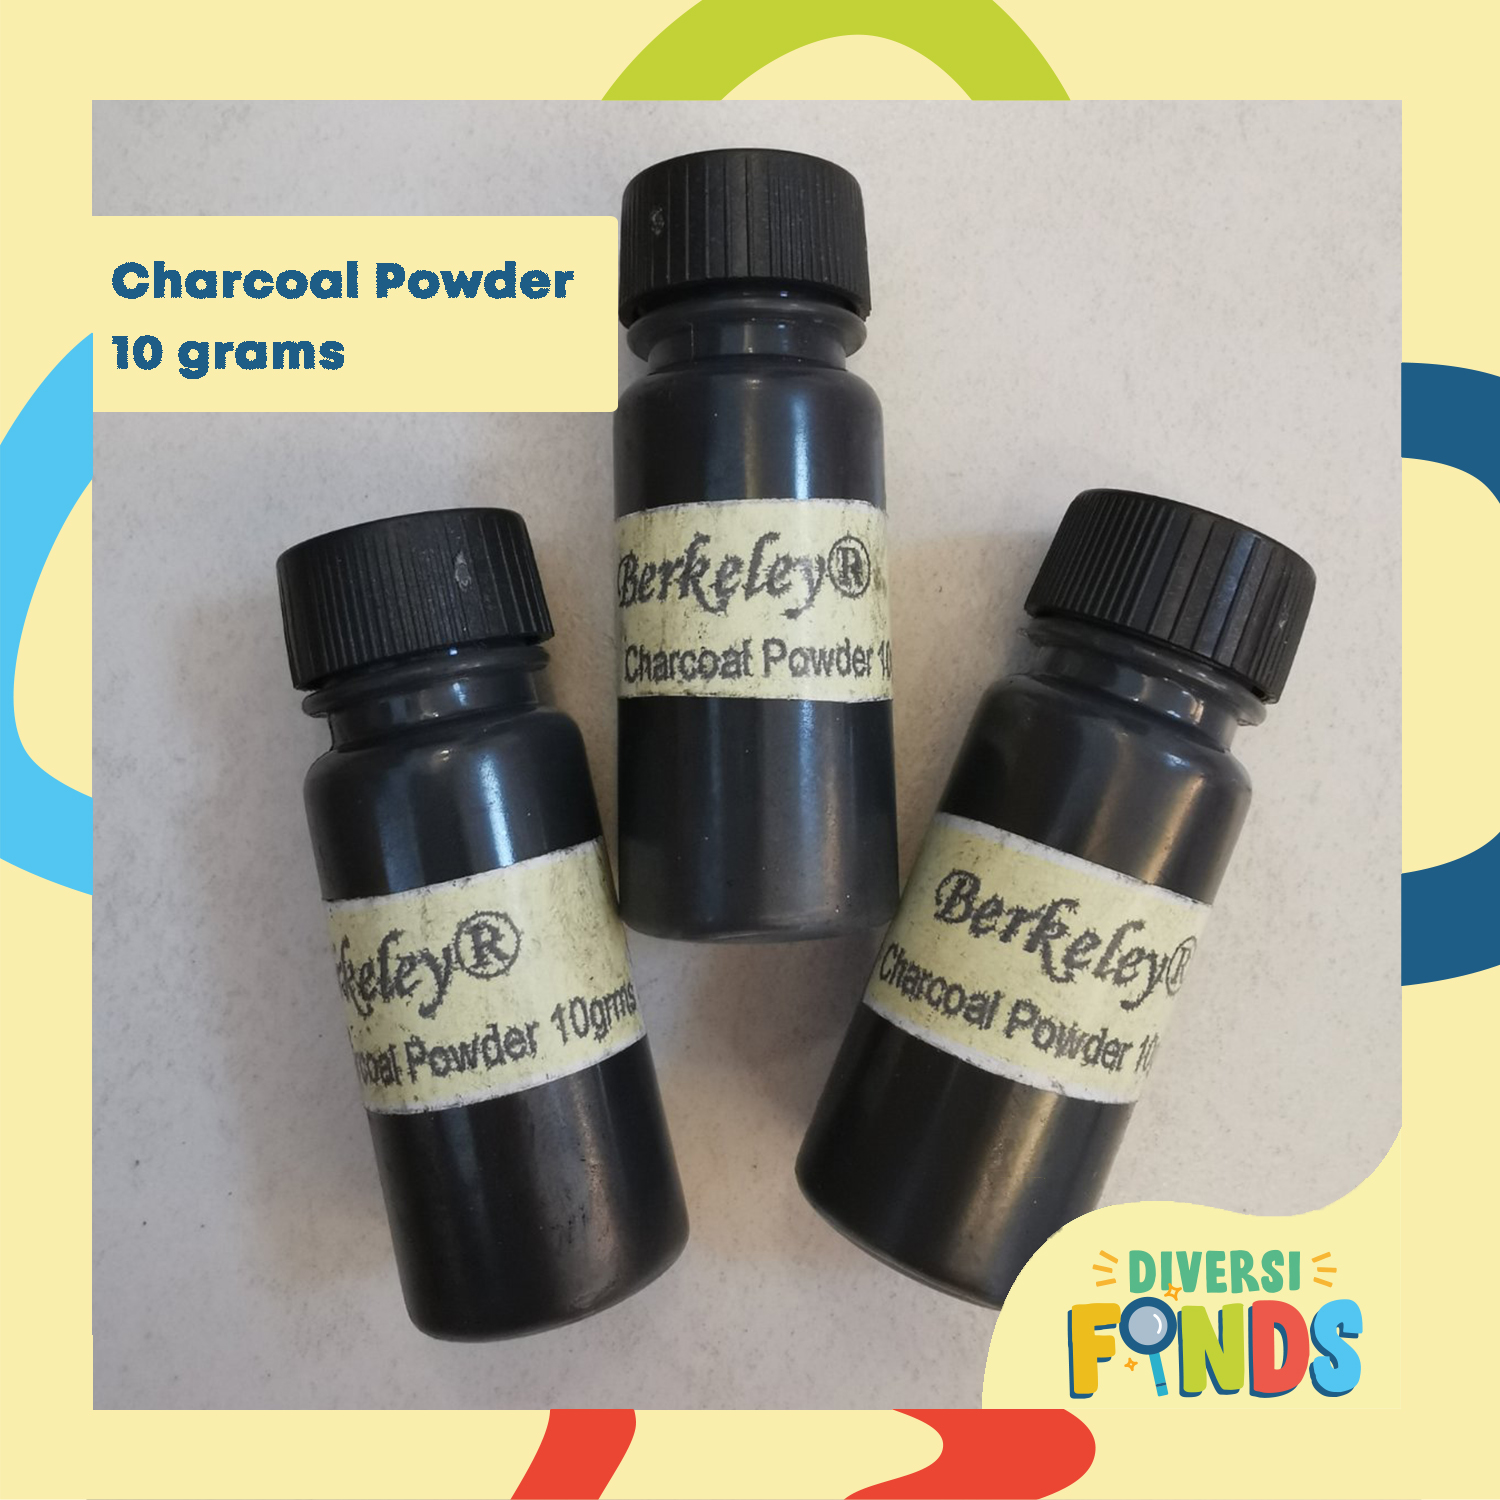 Berkeley Charcoal Powder 10grams